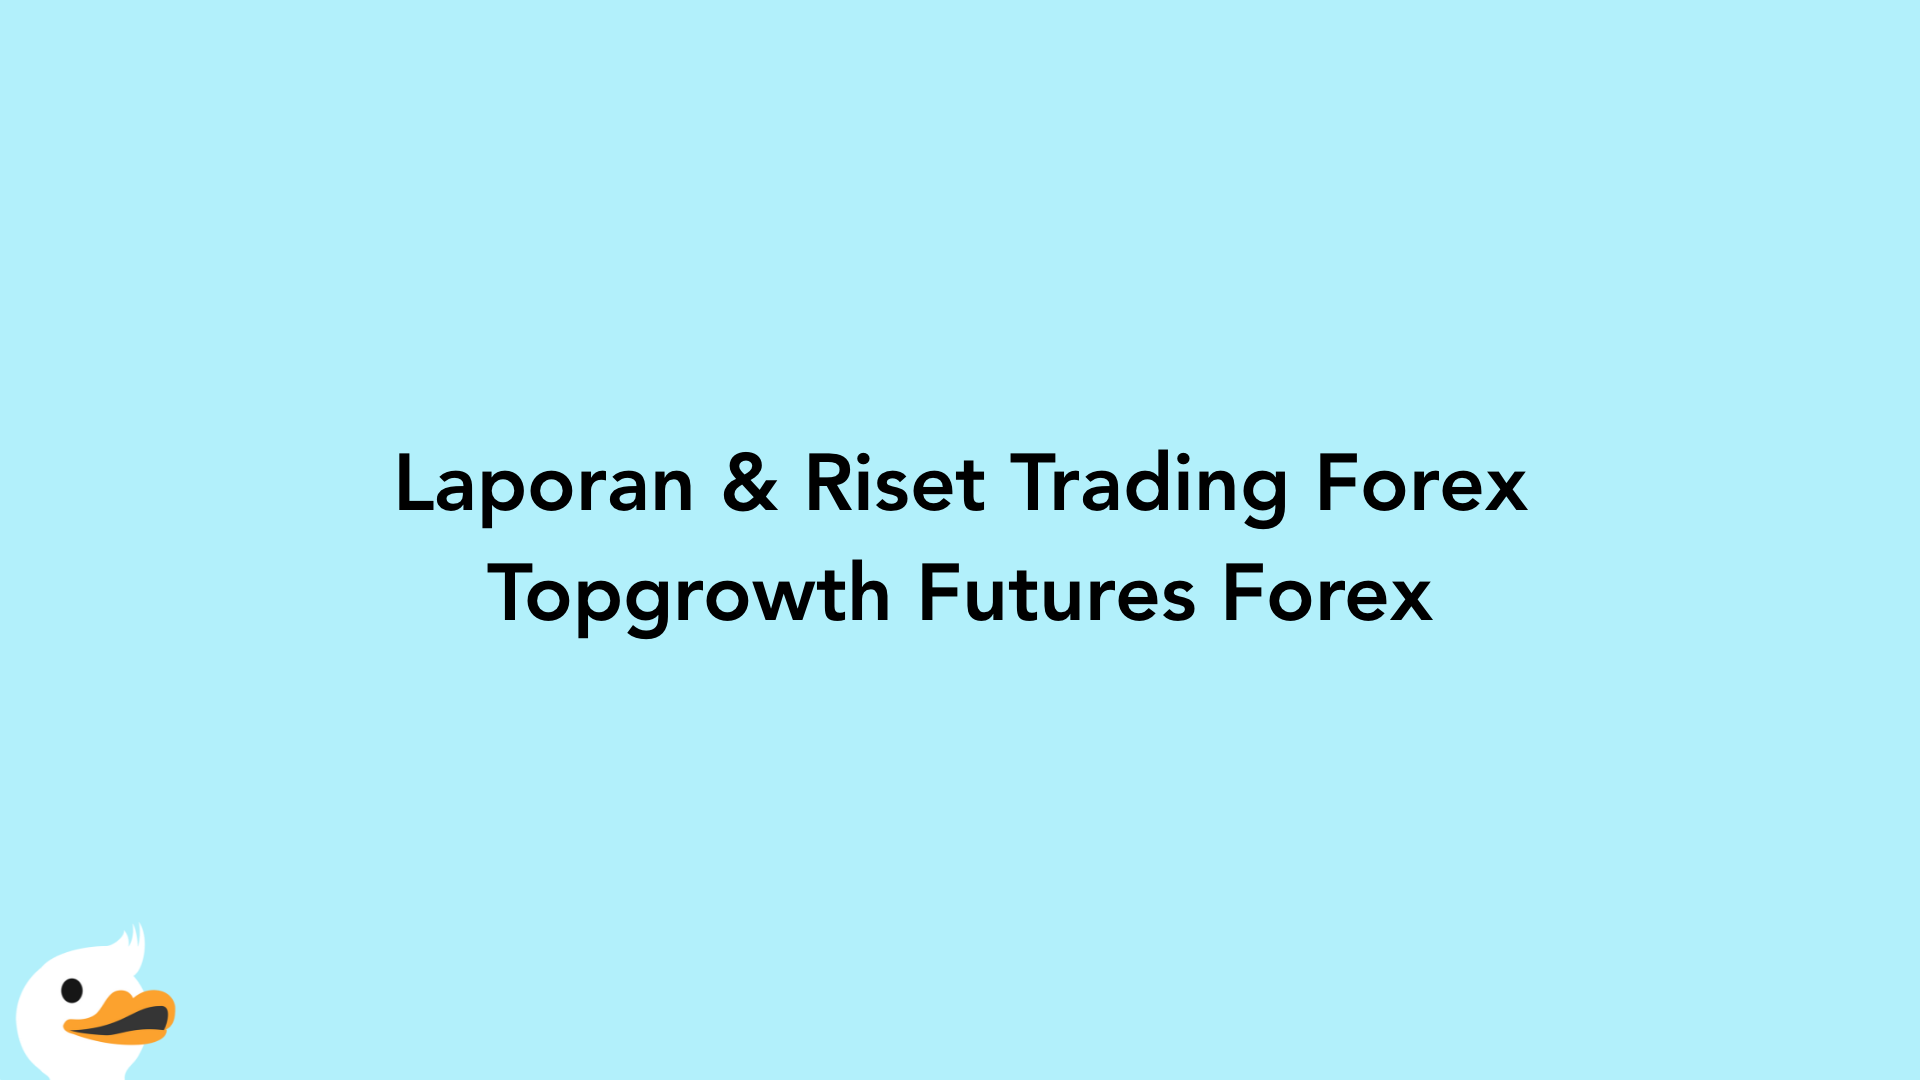 Laporan & Riset Trading Forex Topgrowth Futures Forex